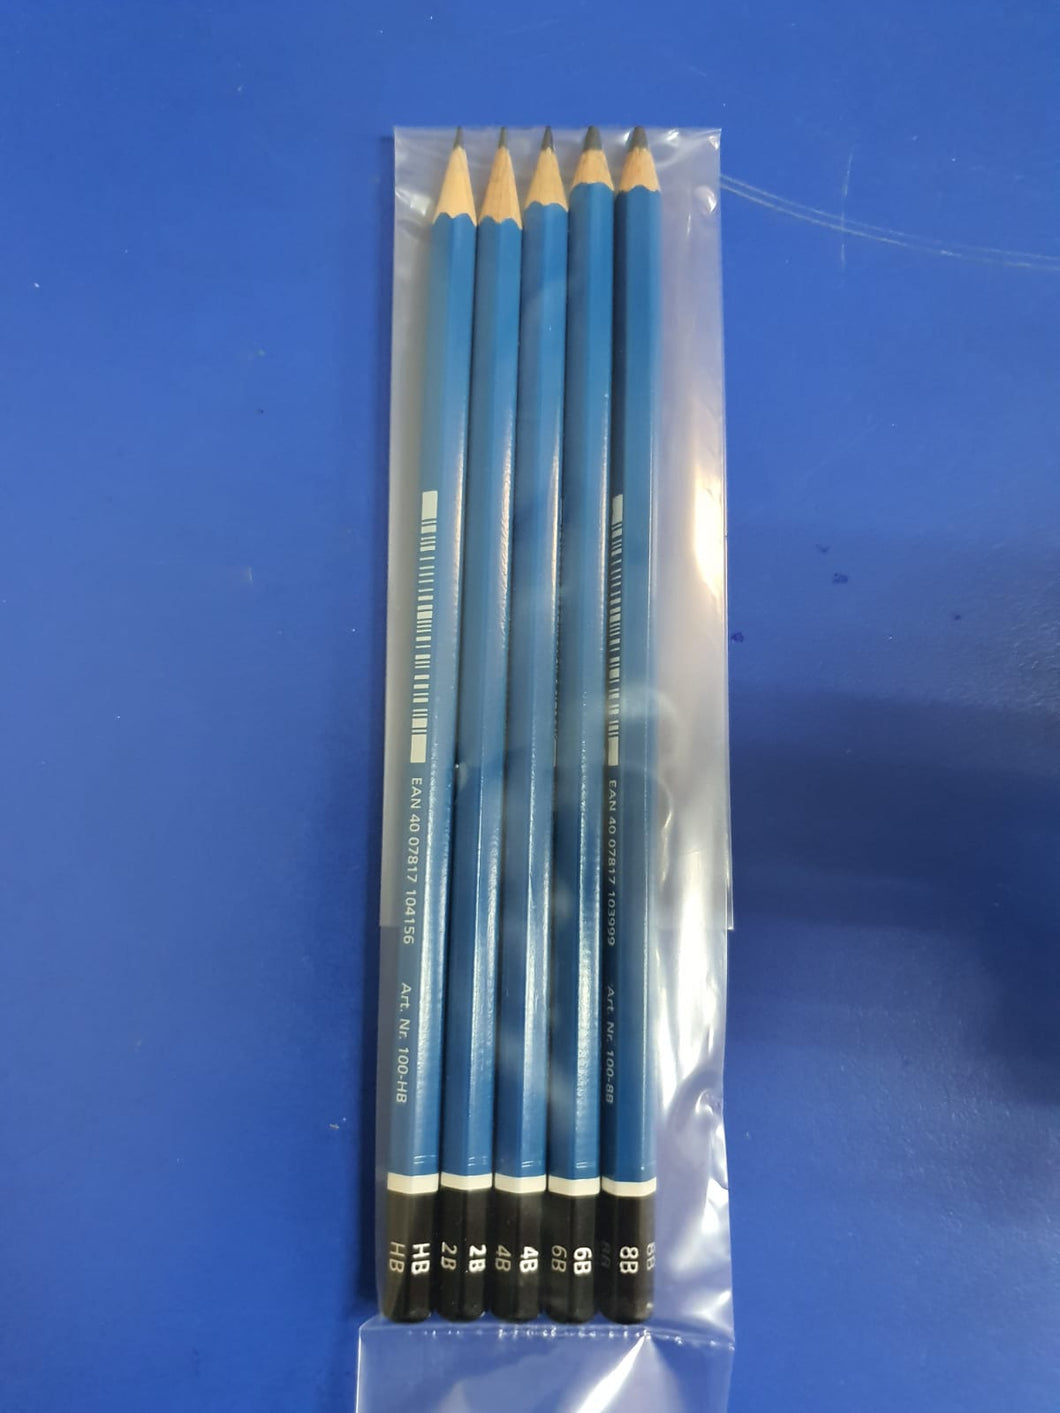 A set of Pencils (HB, 2B, 4B, 6B, 8B) (Art/D&T)